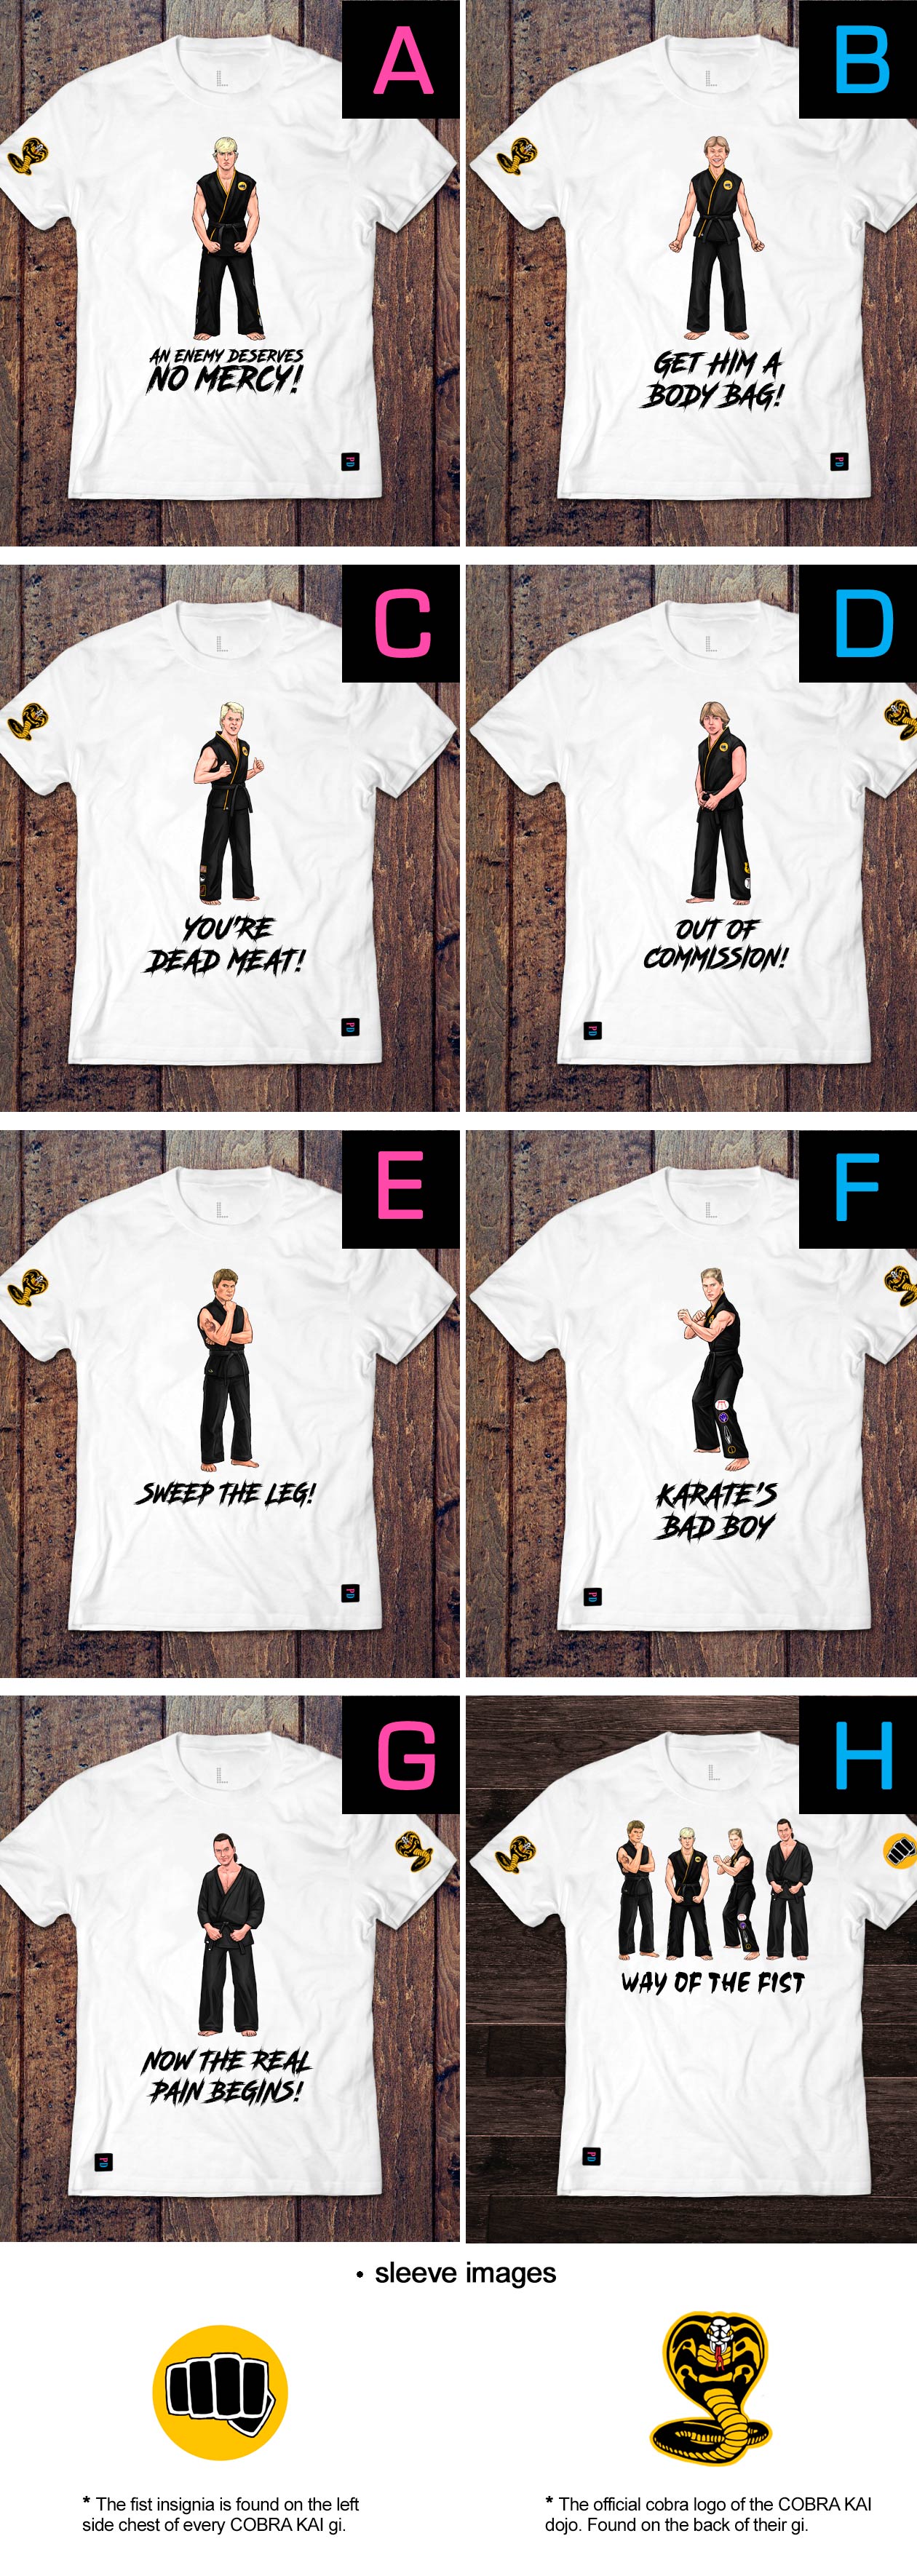 Always Strike First PD T-Shirt designs by Marten Go aka MGO